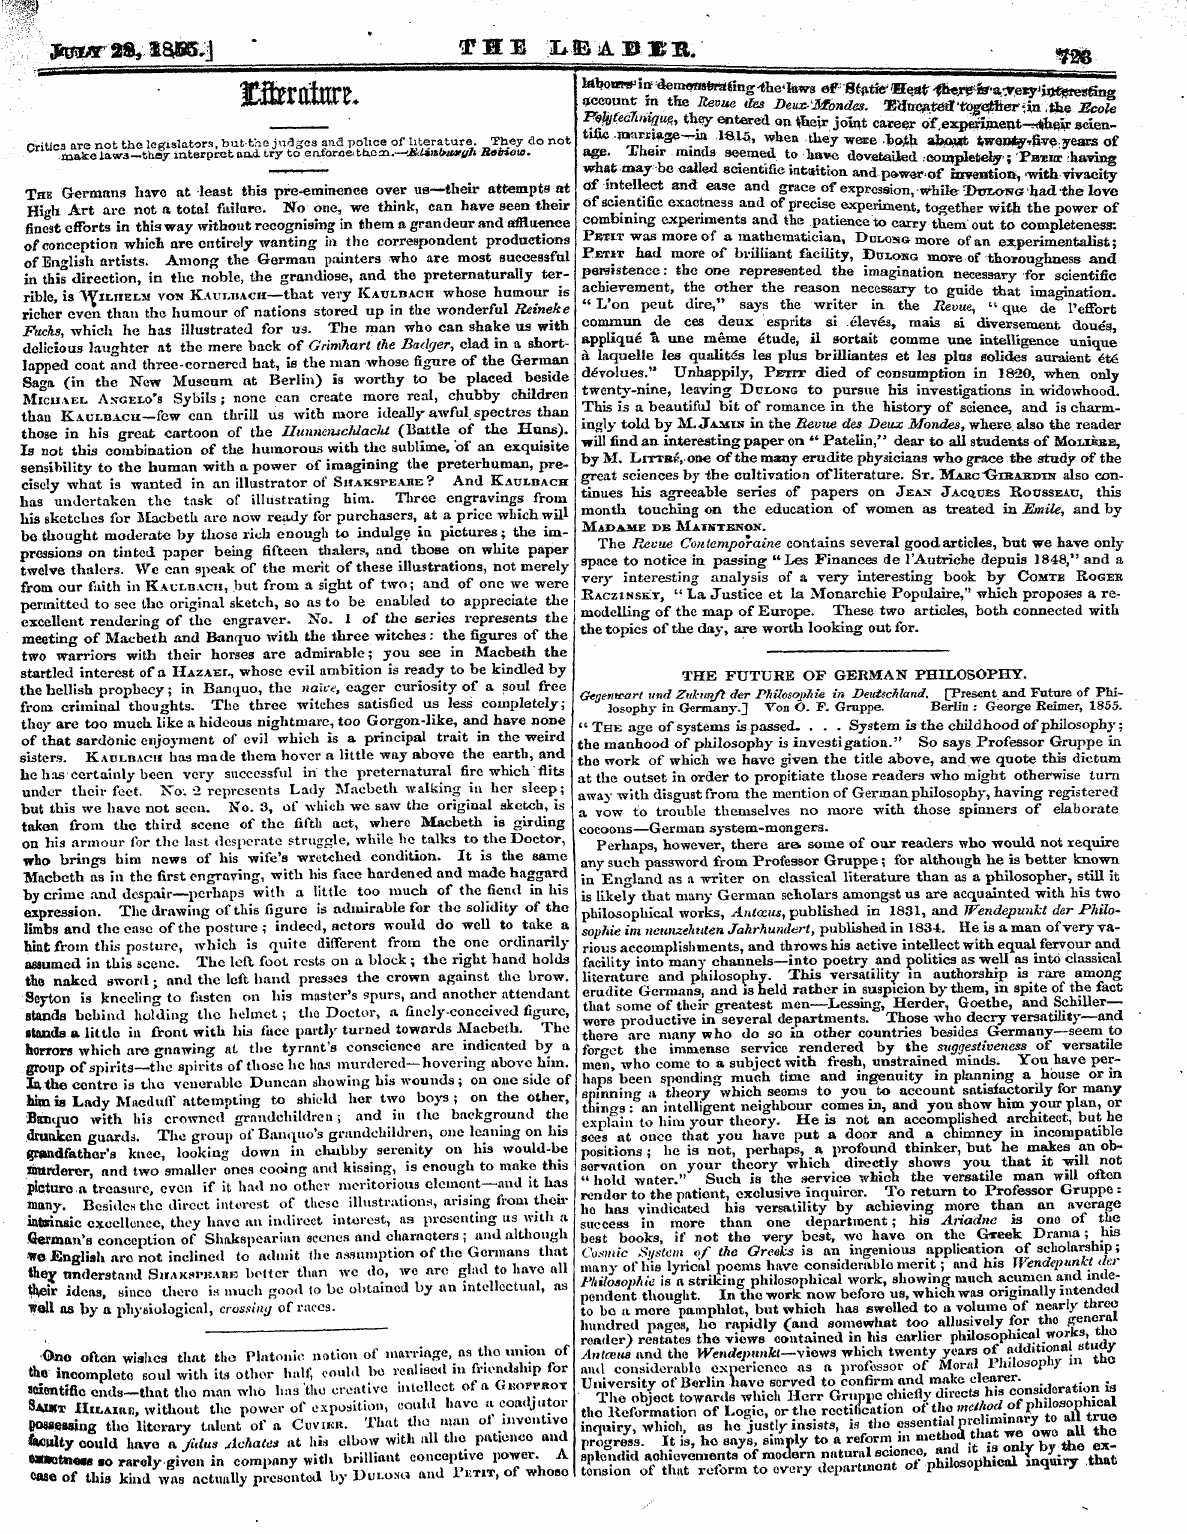 Leader (1850-1860): jS F Y, 2nd edition - Ffirritee.